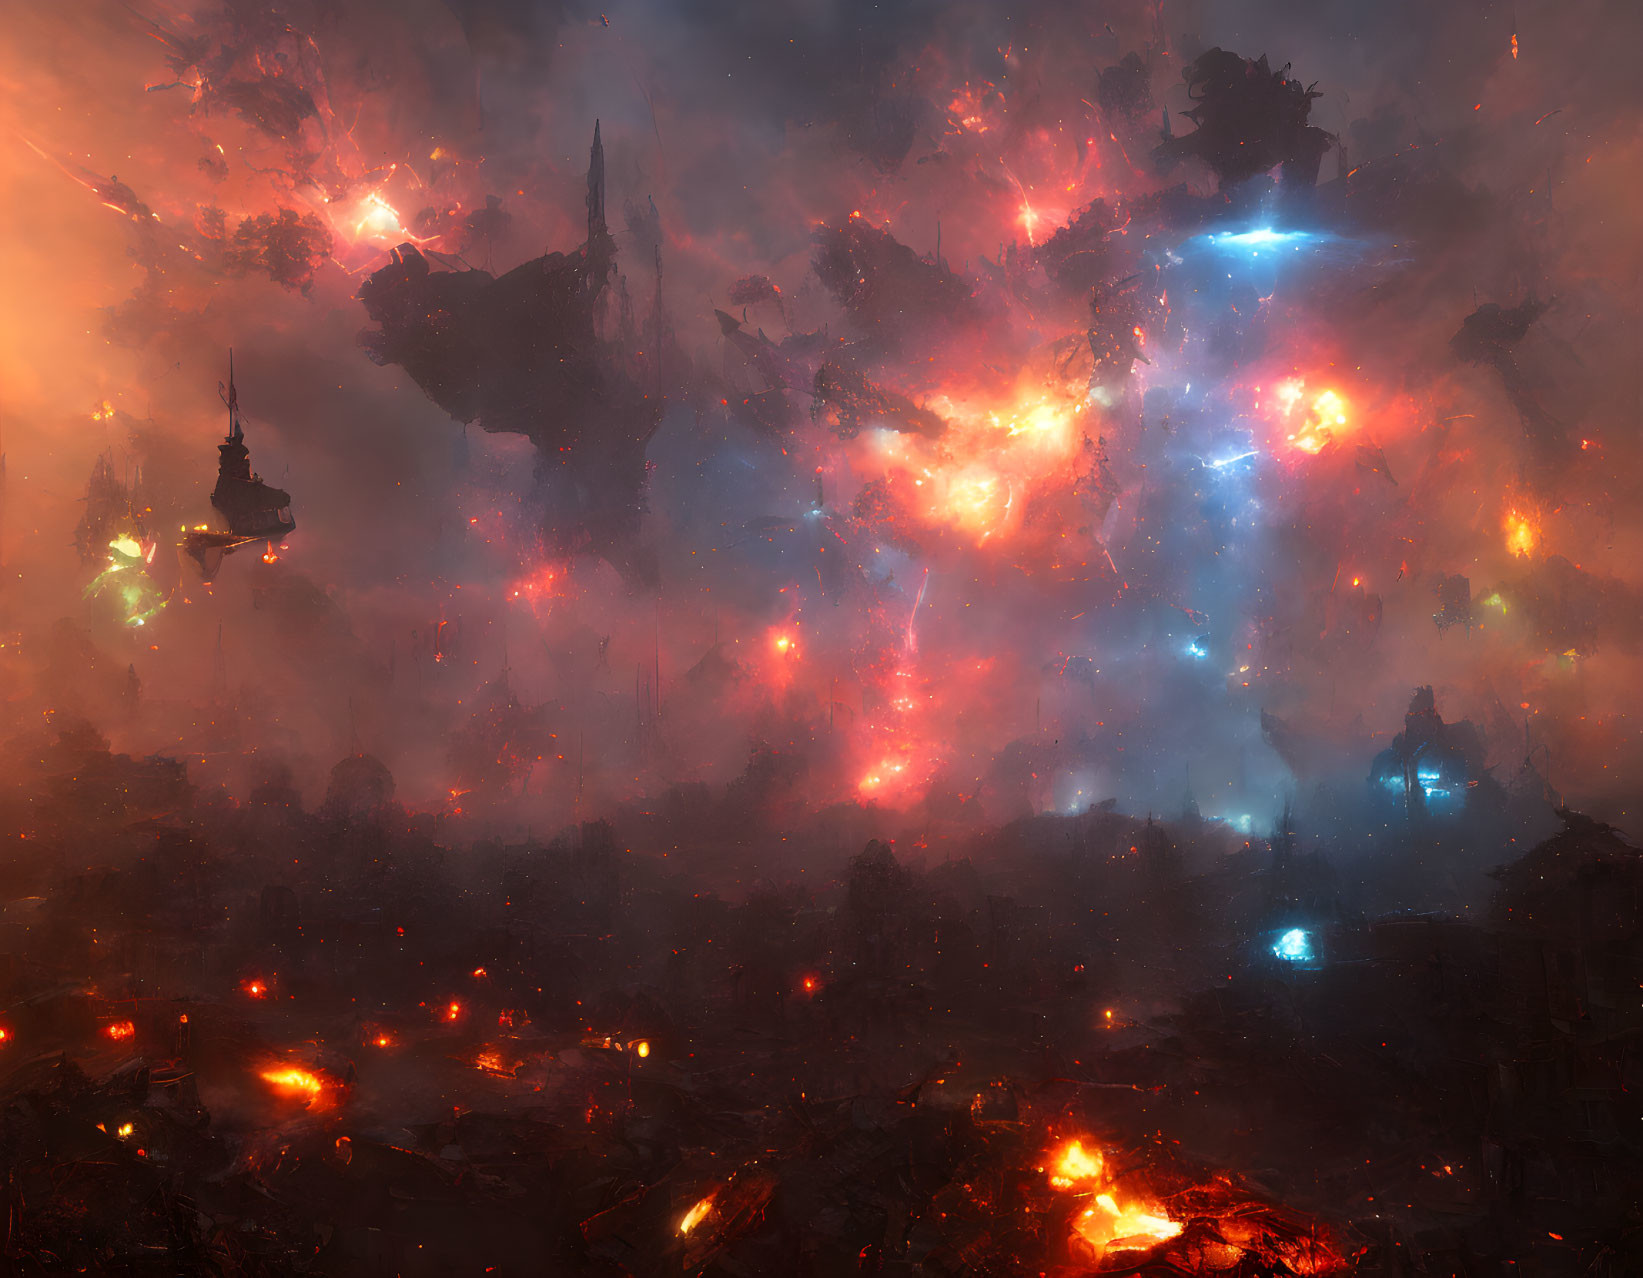 Vivid otherworldly illustration of chaotic fiery landscape